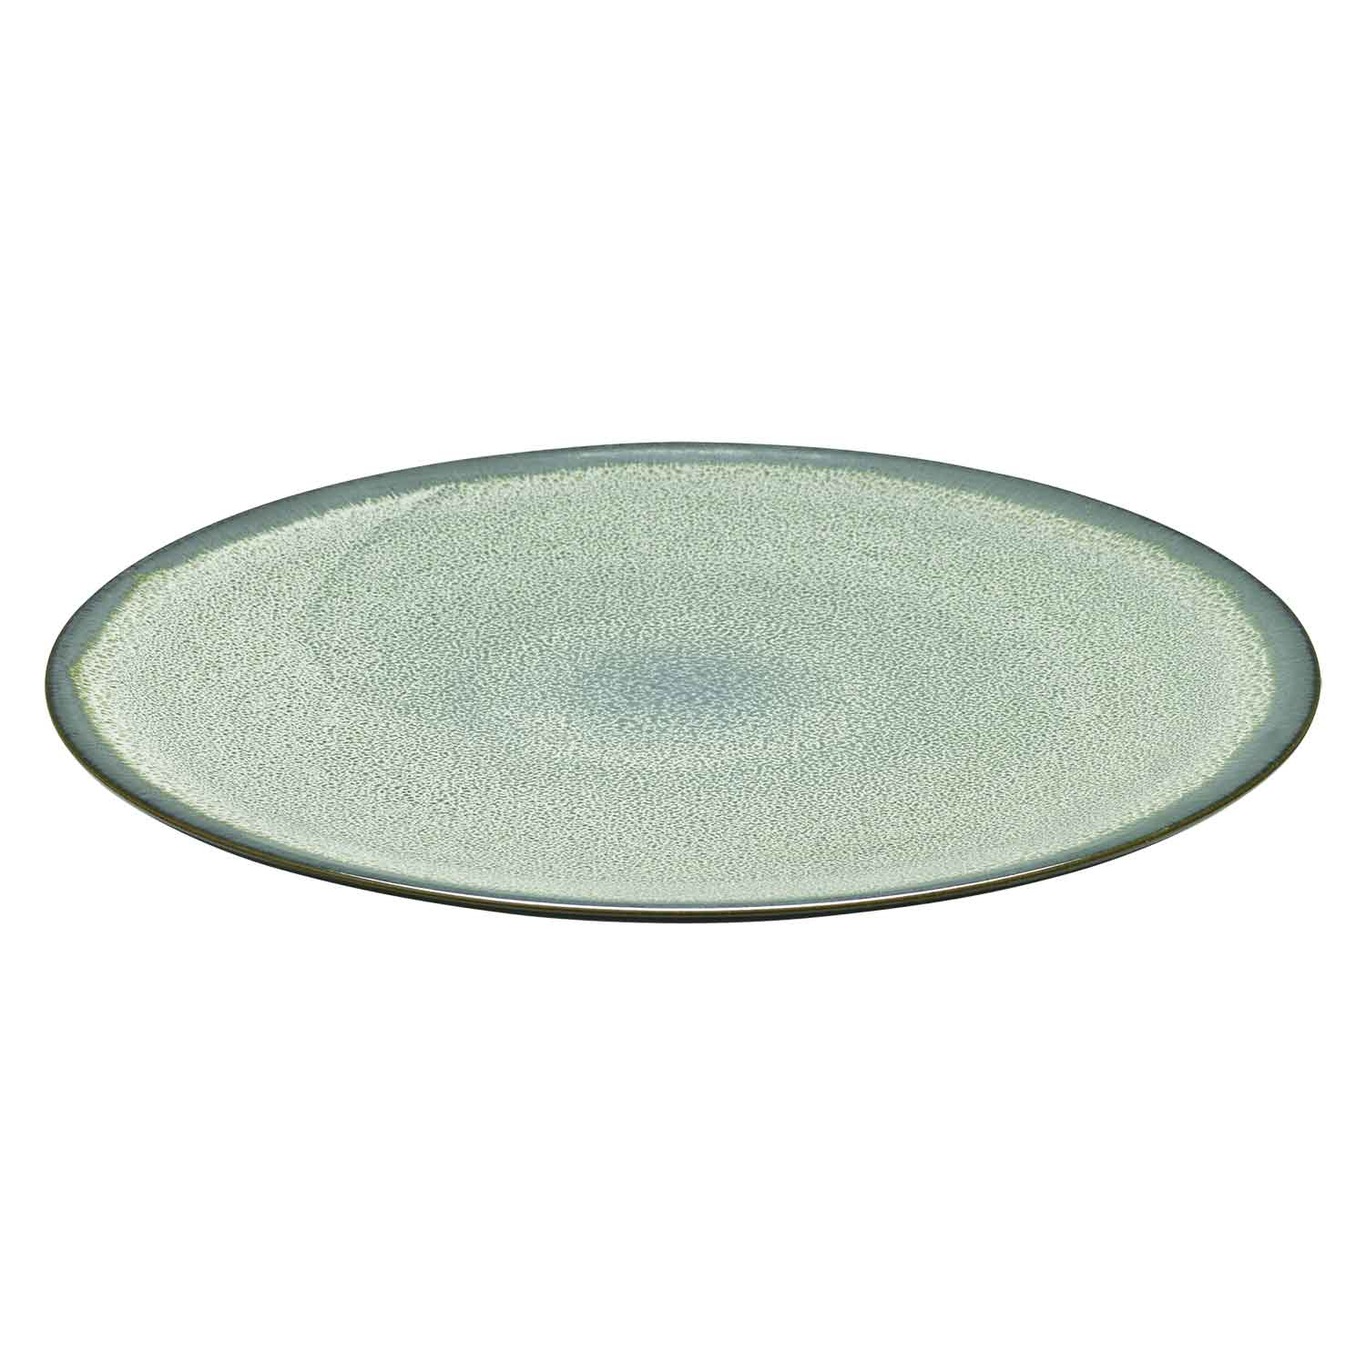 Ceramic Workshop Plate 26 cm, Lark